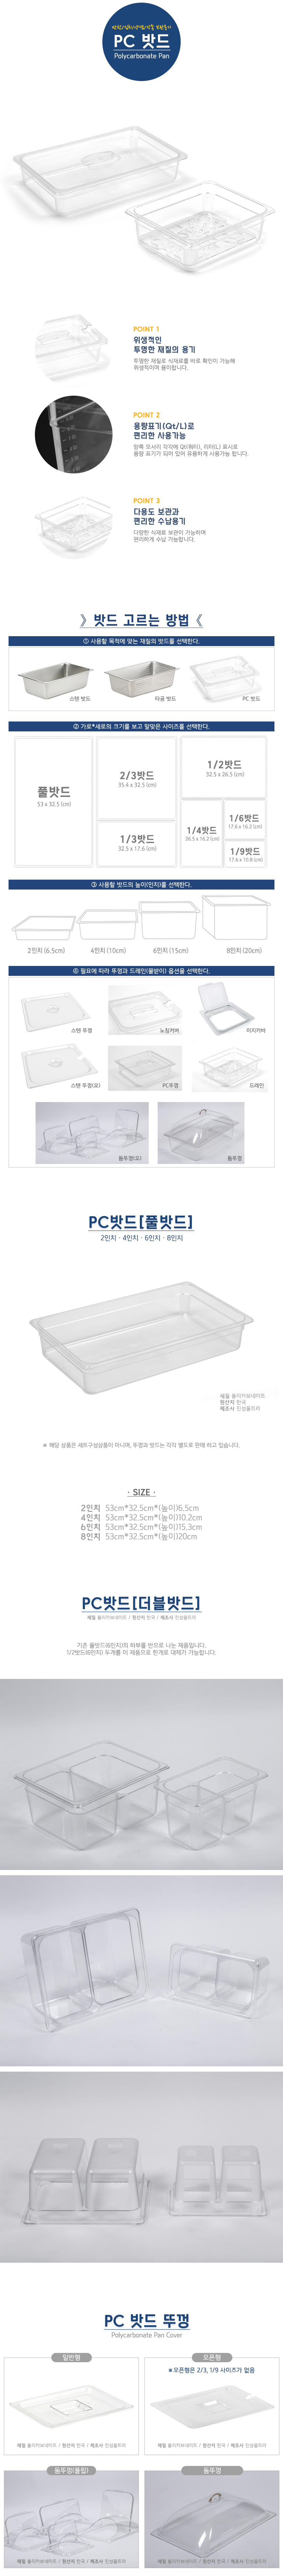 PC 플라스틱 투명 풀밧드 6인치 플라스틱밧드 밧트 바트 반찬통 업소용밧드 투명밧드 덮개밧드 뚜껑밧드 찬통 반찬보관용기